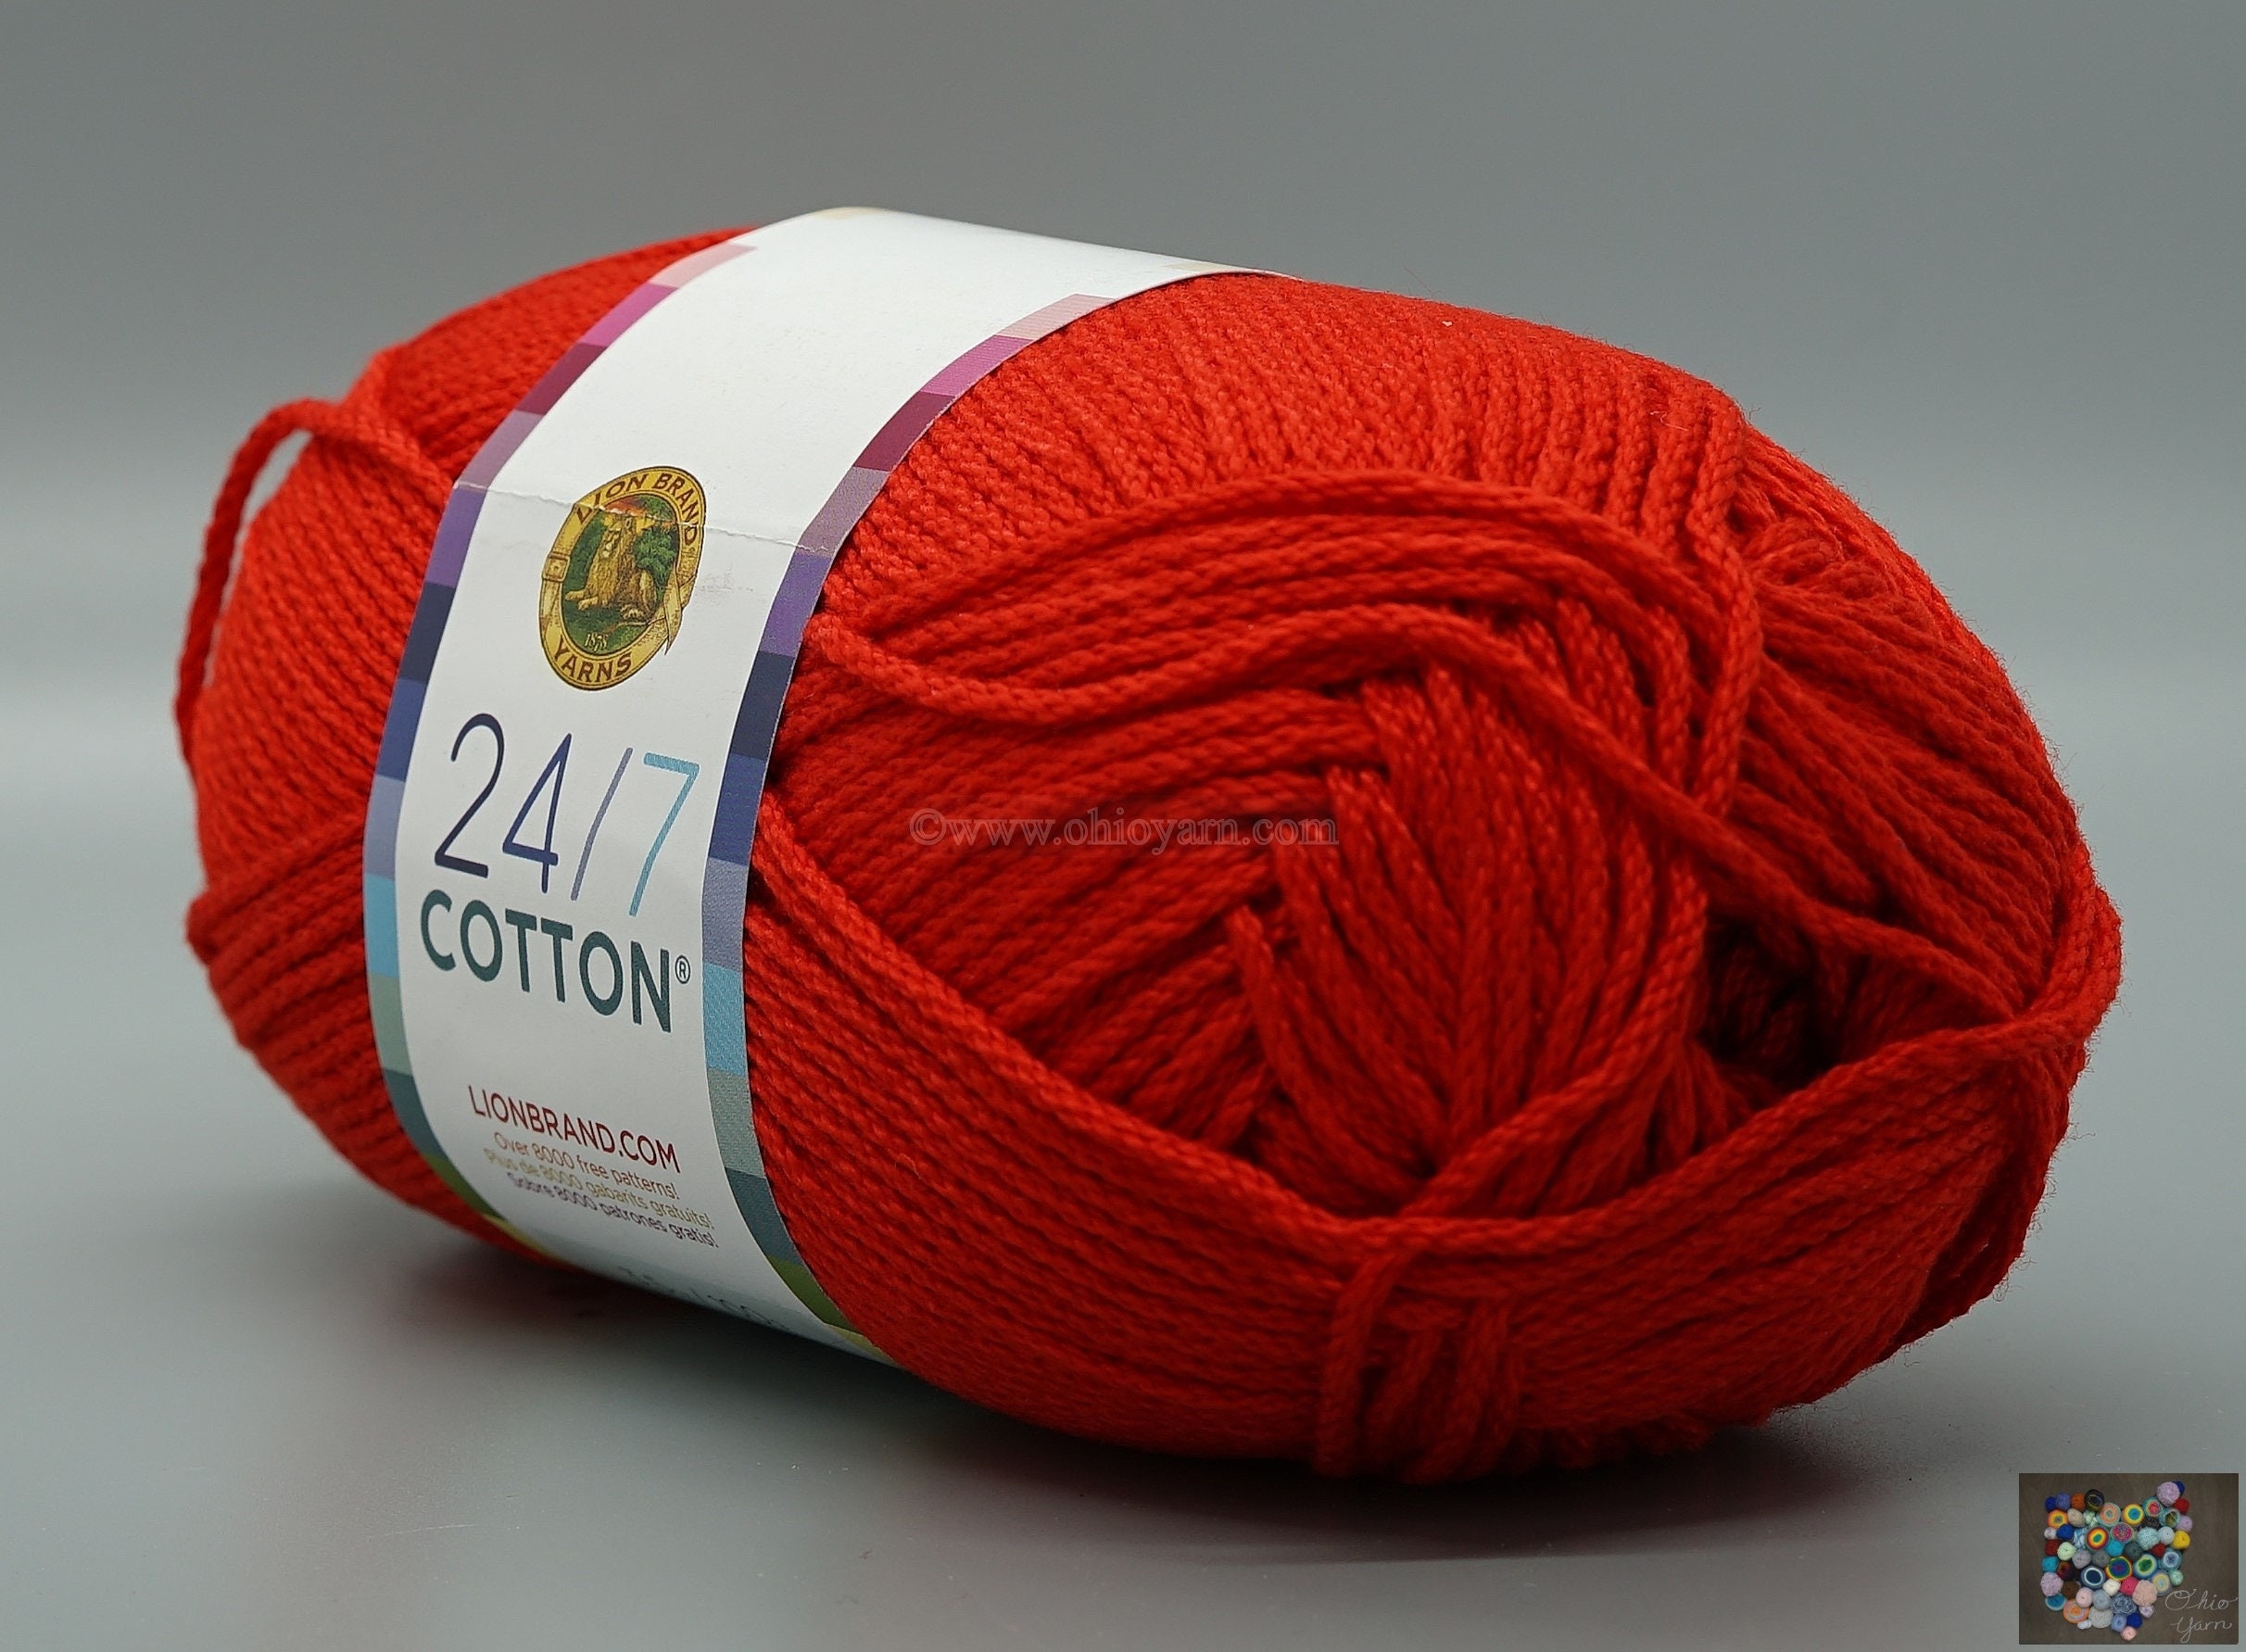 Lion Brand 24/7 Cotton Yarn (Red)